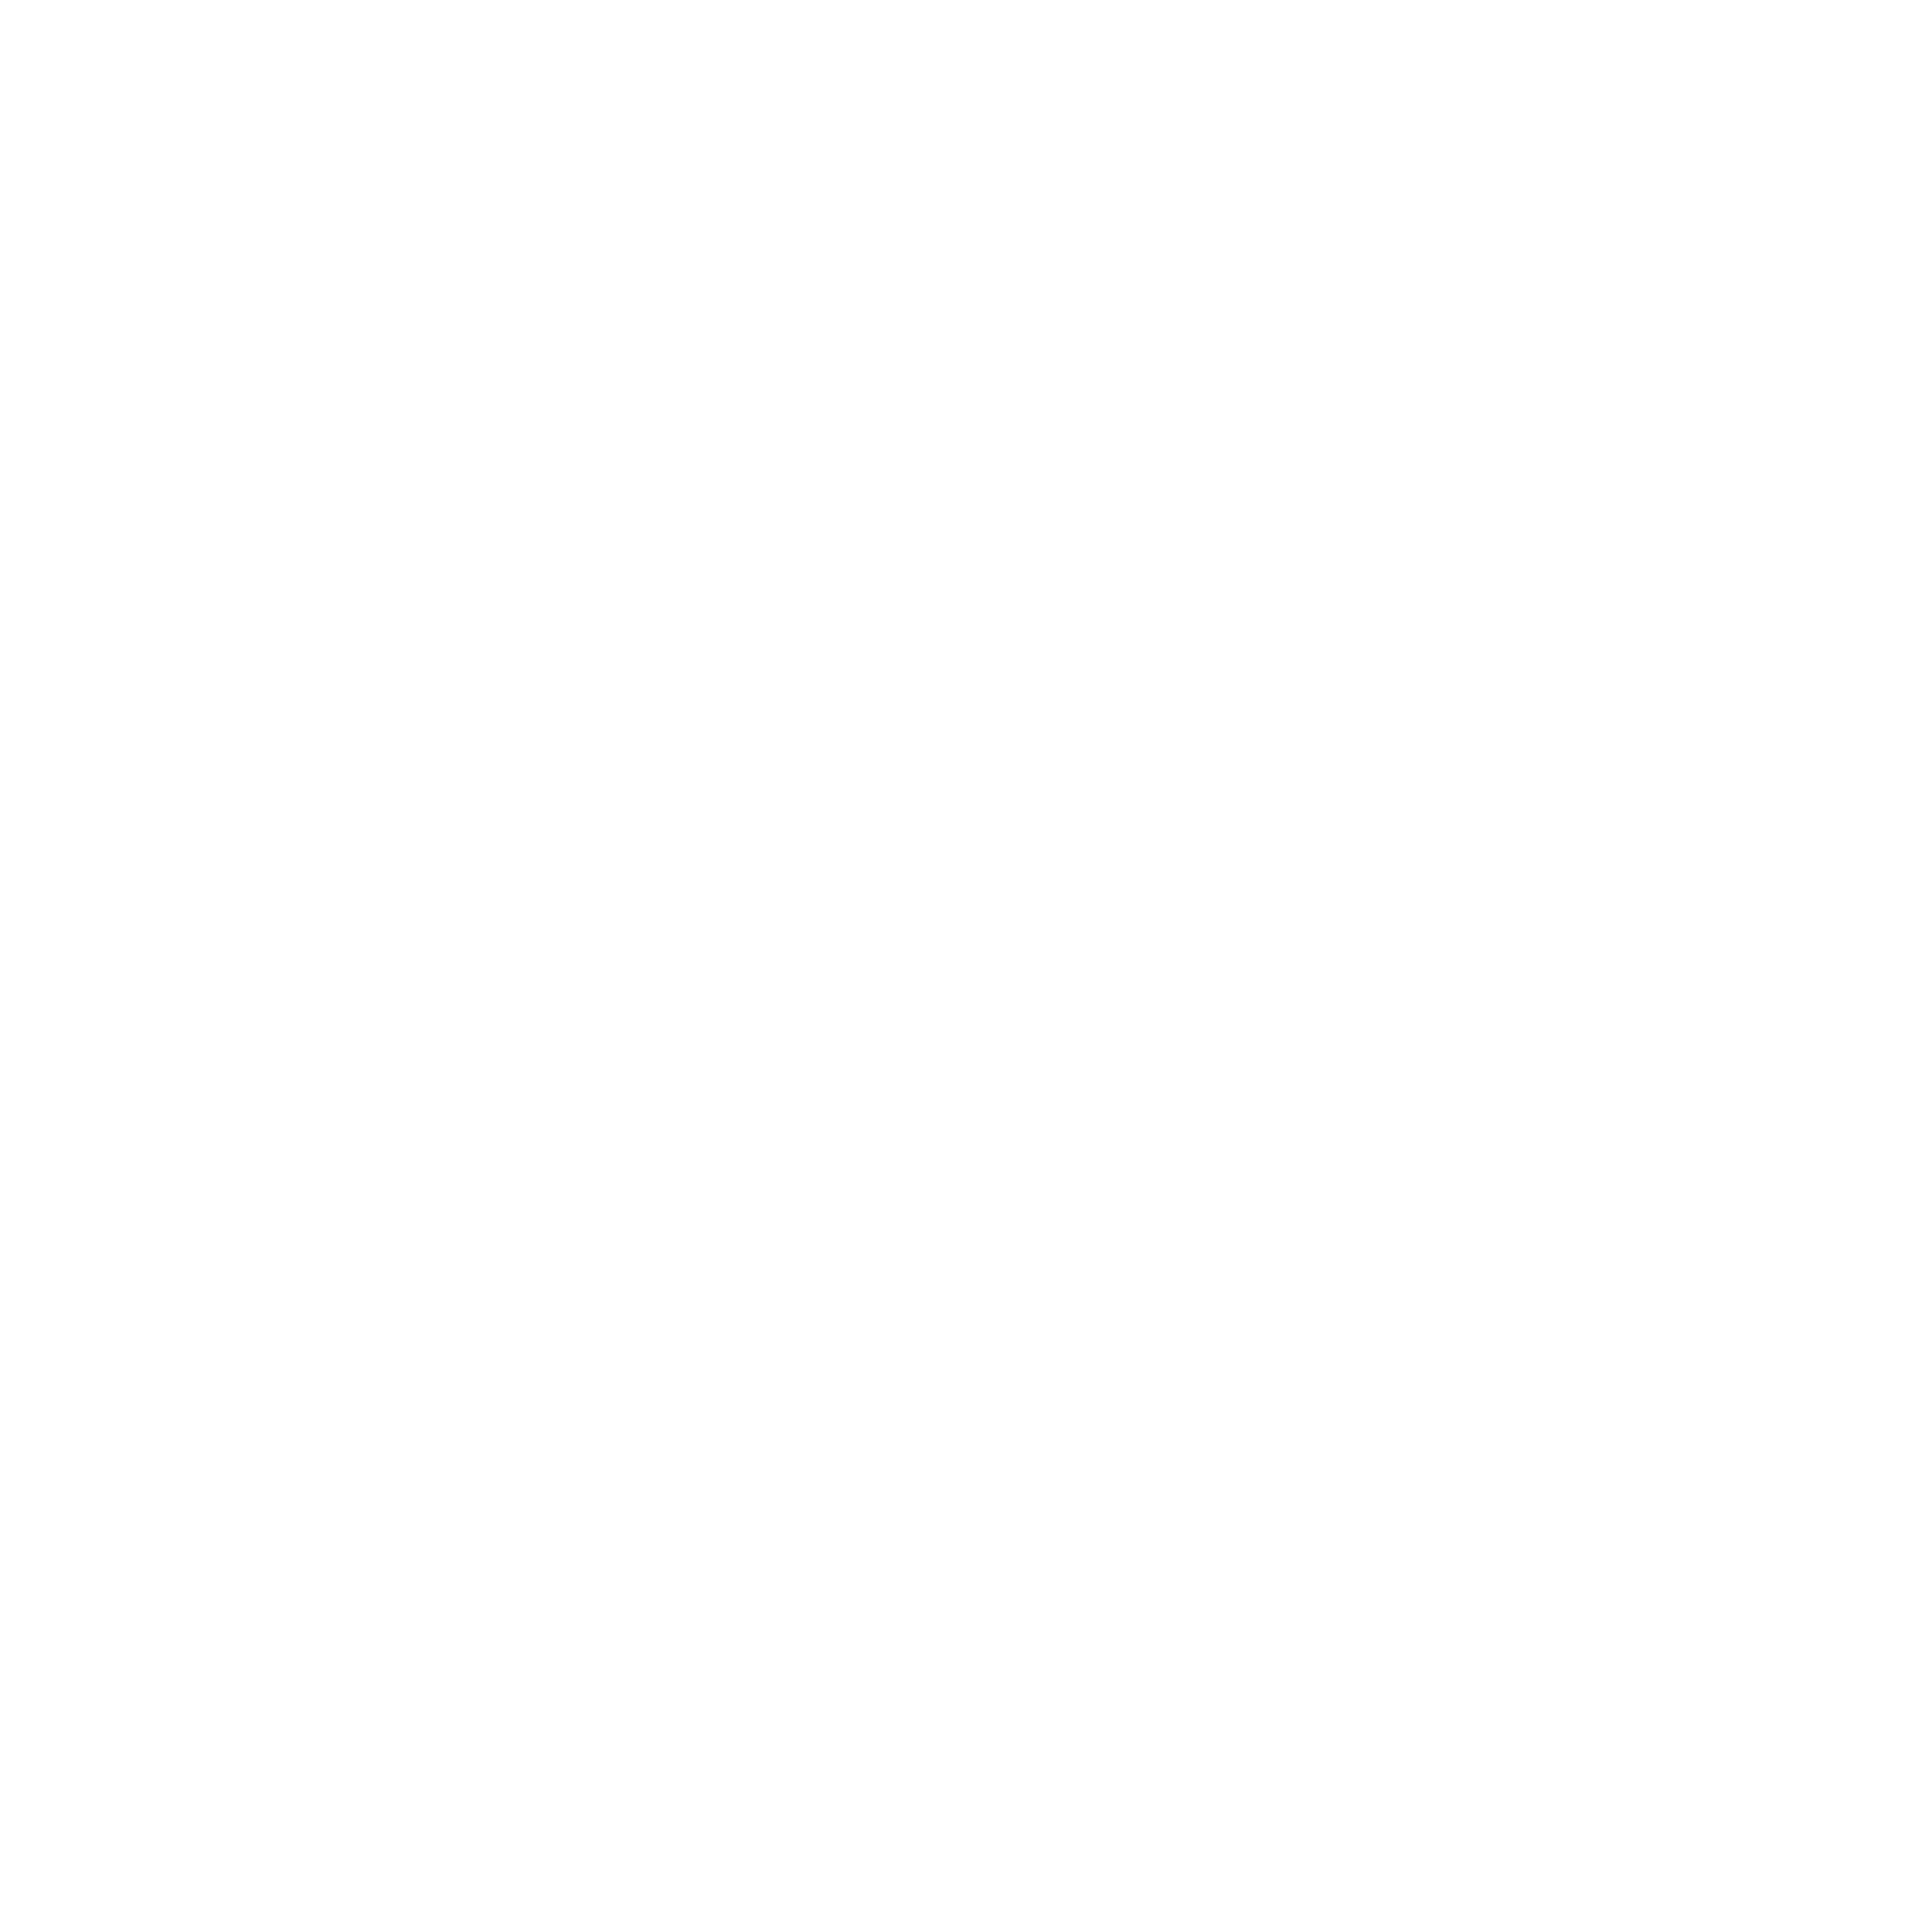 OhioHealth Logo - OhioHealth Logo PNG Transparent & SVG Vector